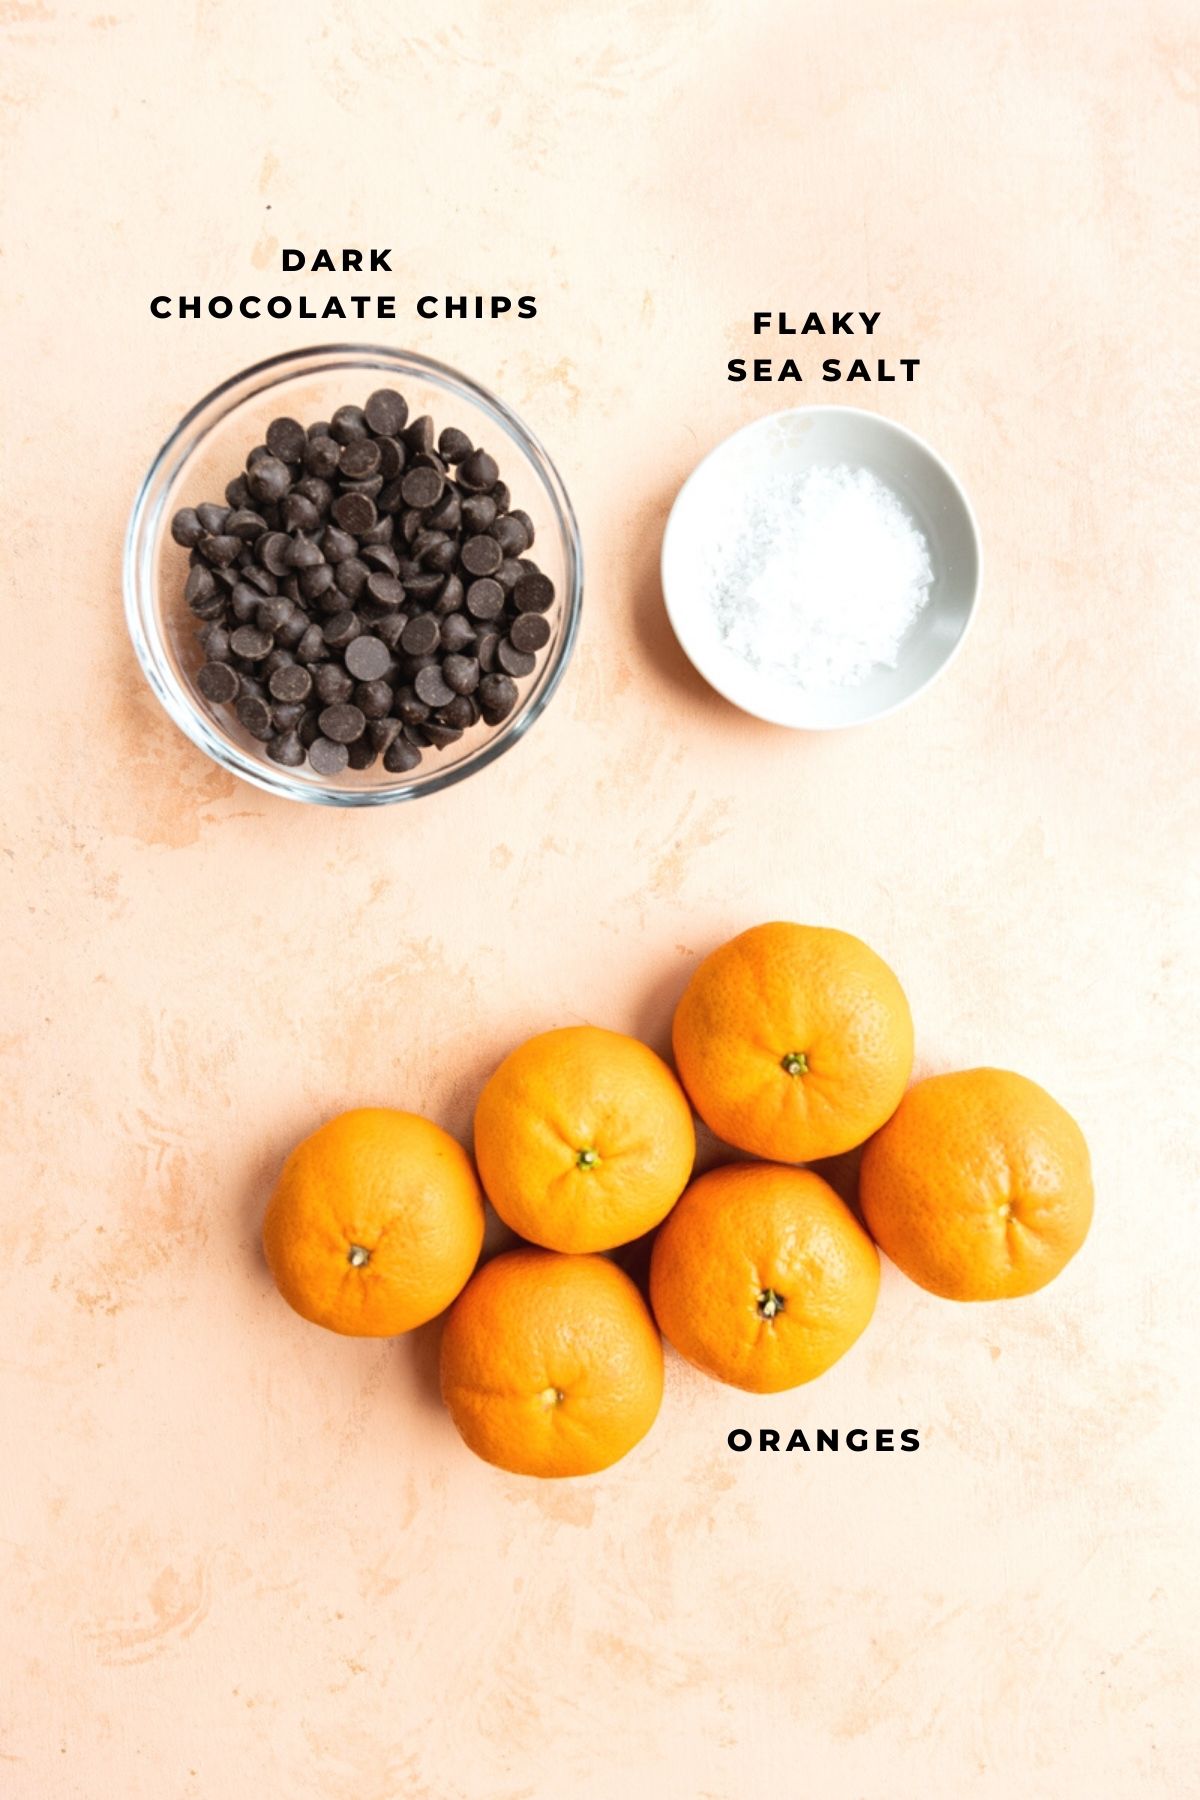 Chocolate covered orange ingredients.